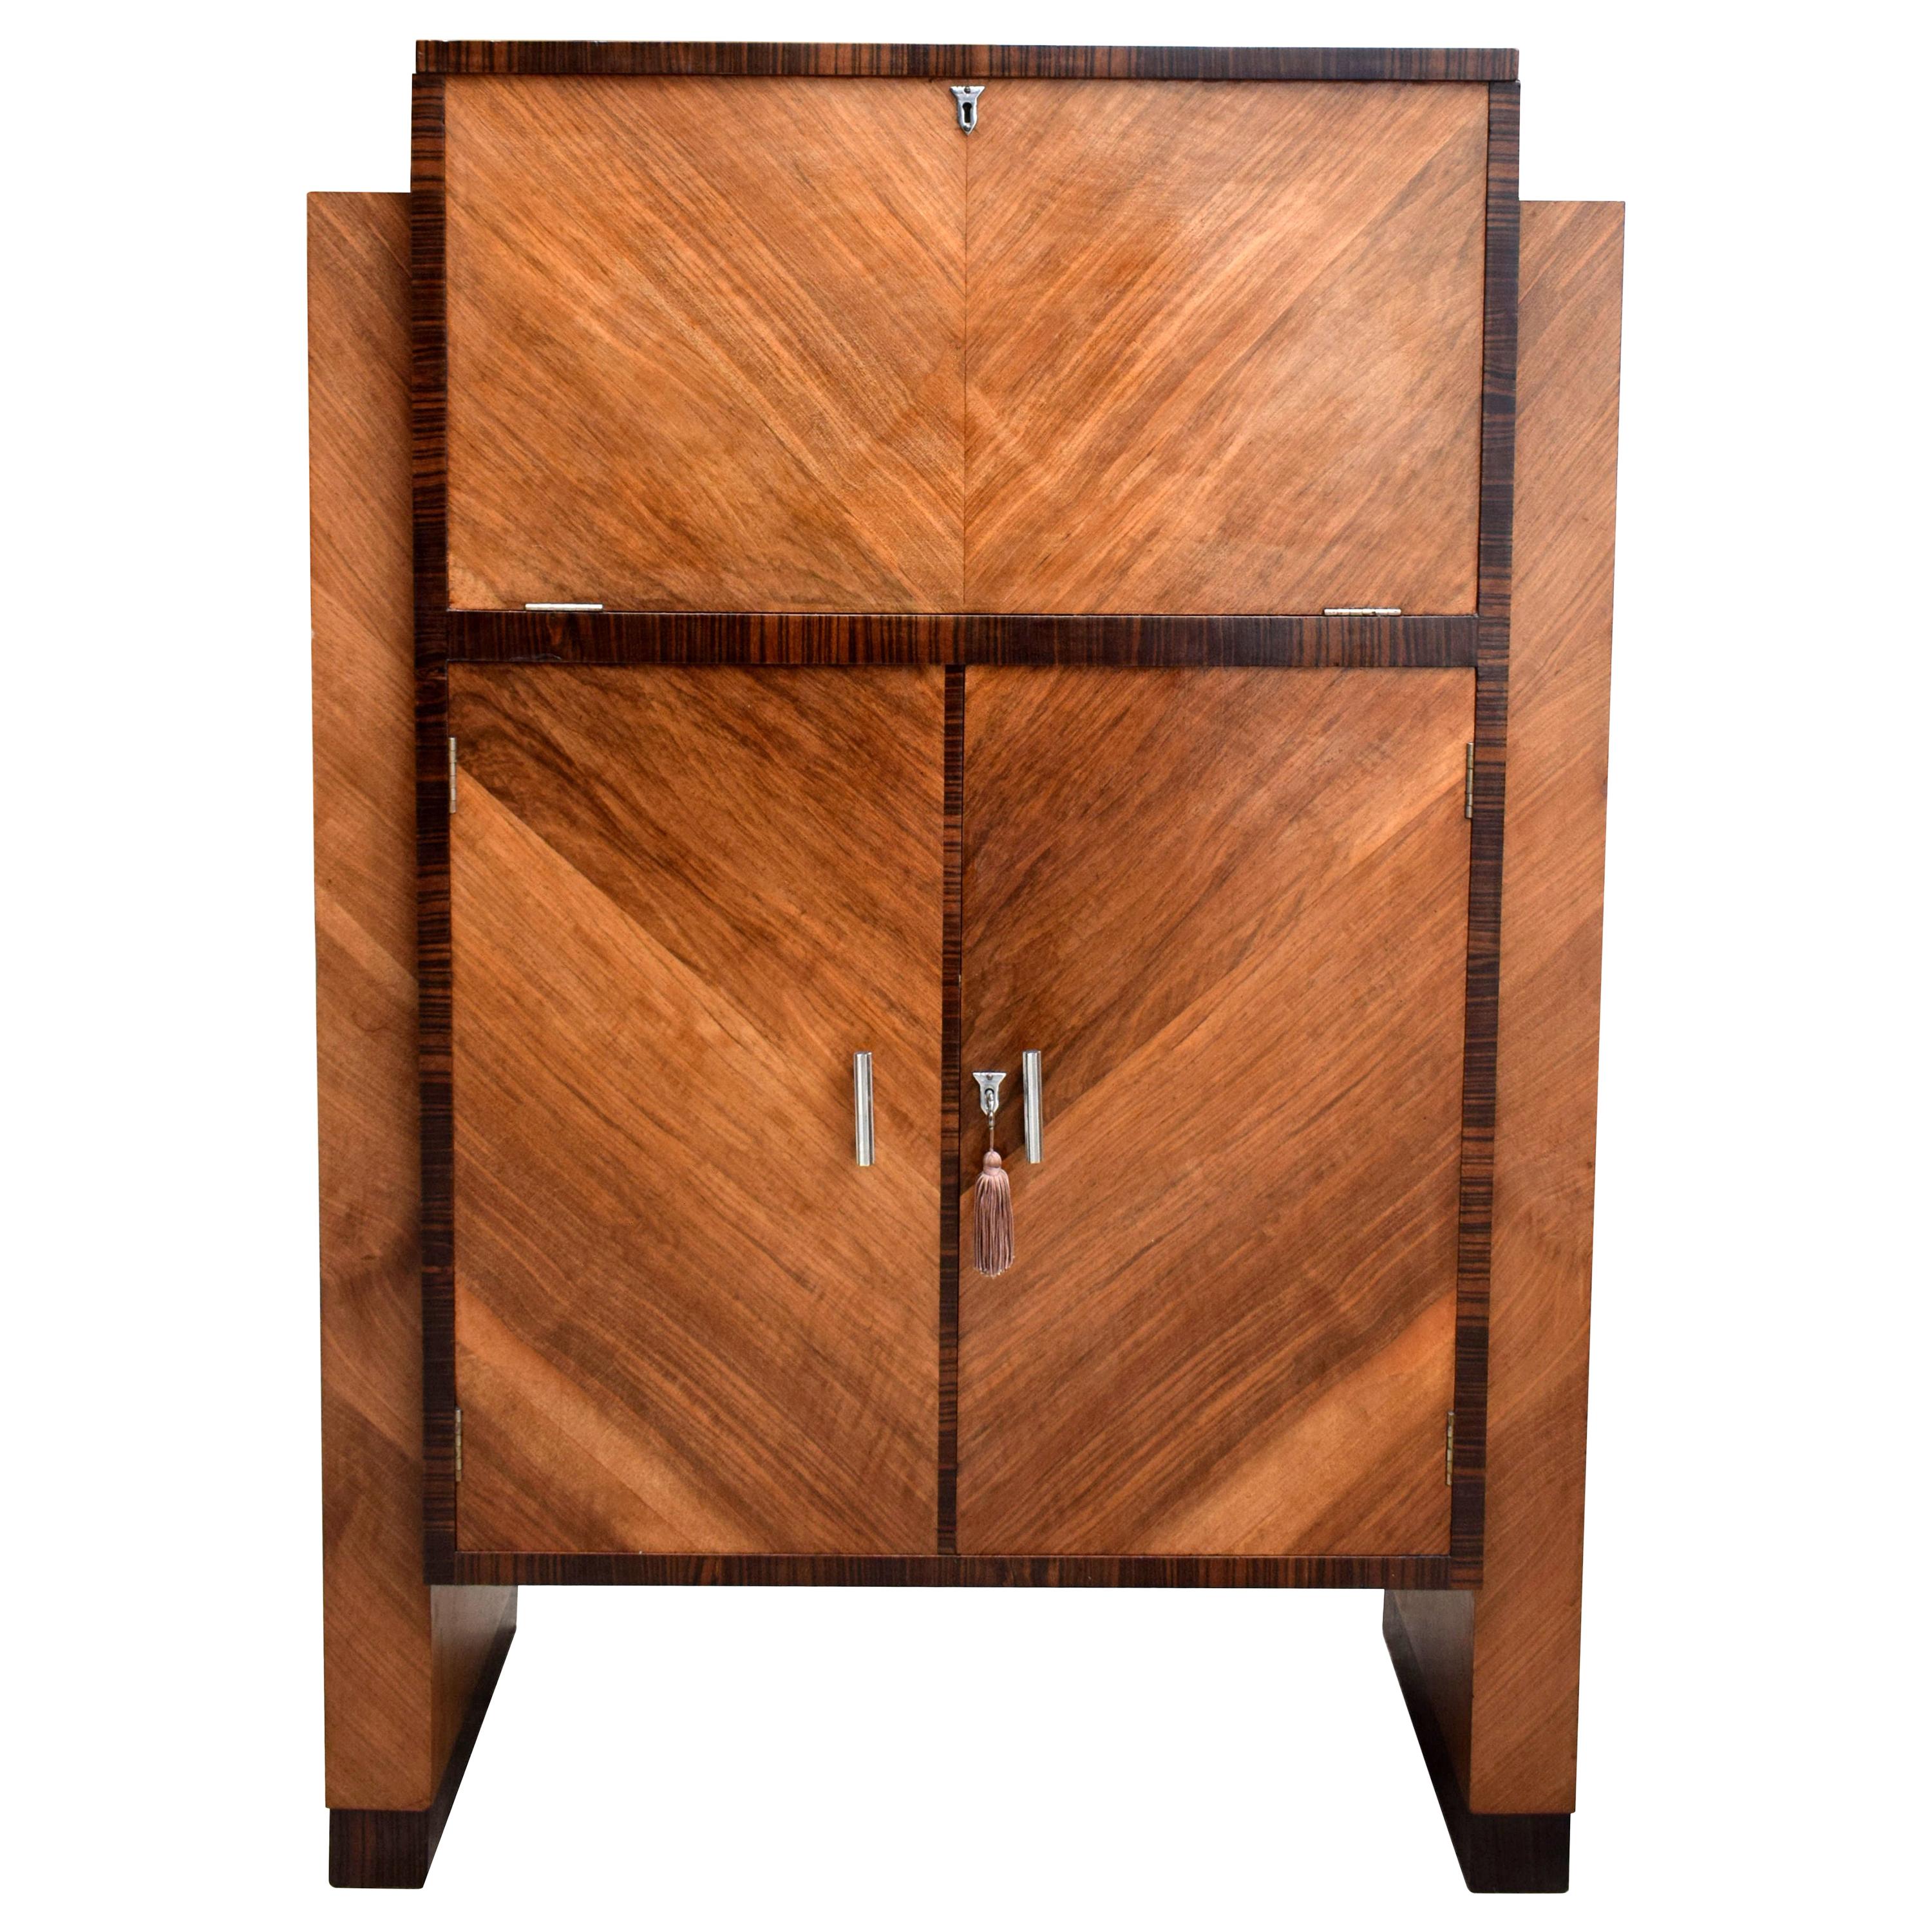 Art Deco Modernist Cocktail Cabinet, Dry Bar in Walnut & Macassar Ebony